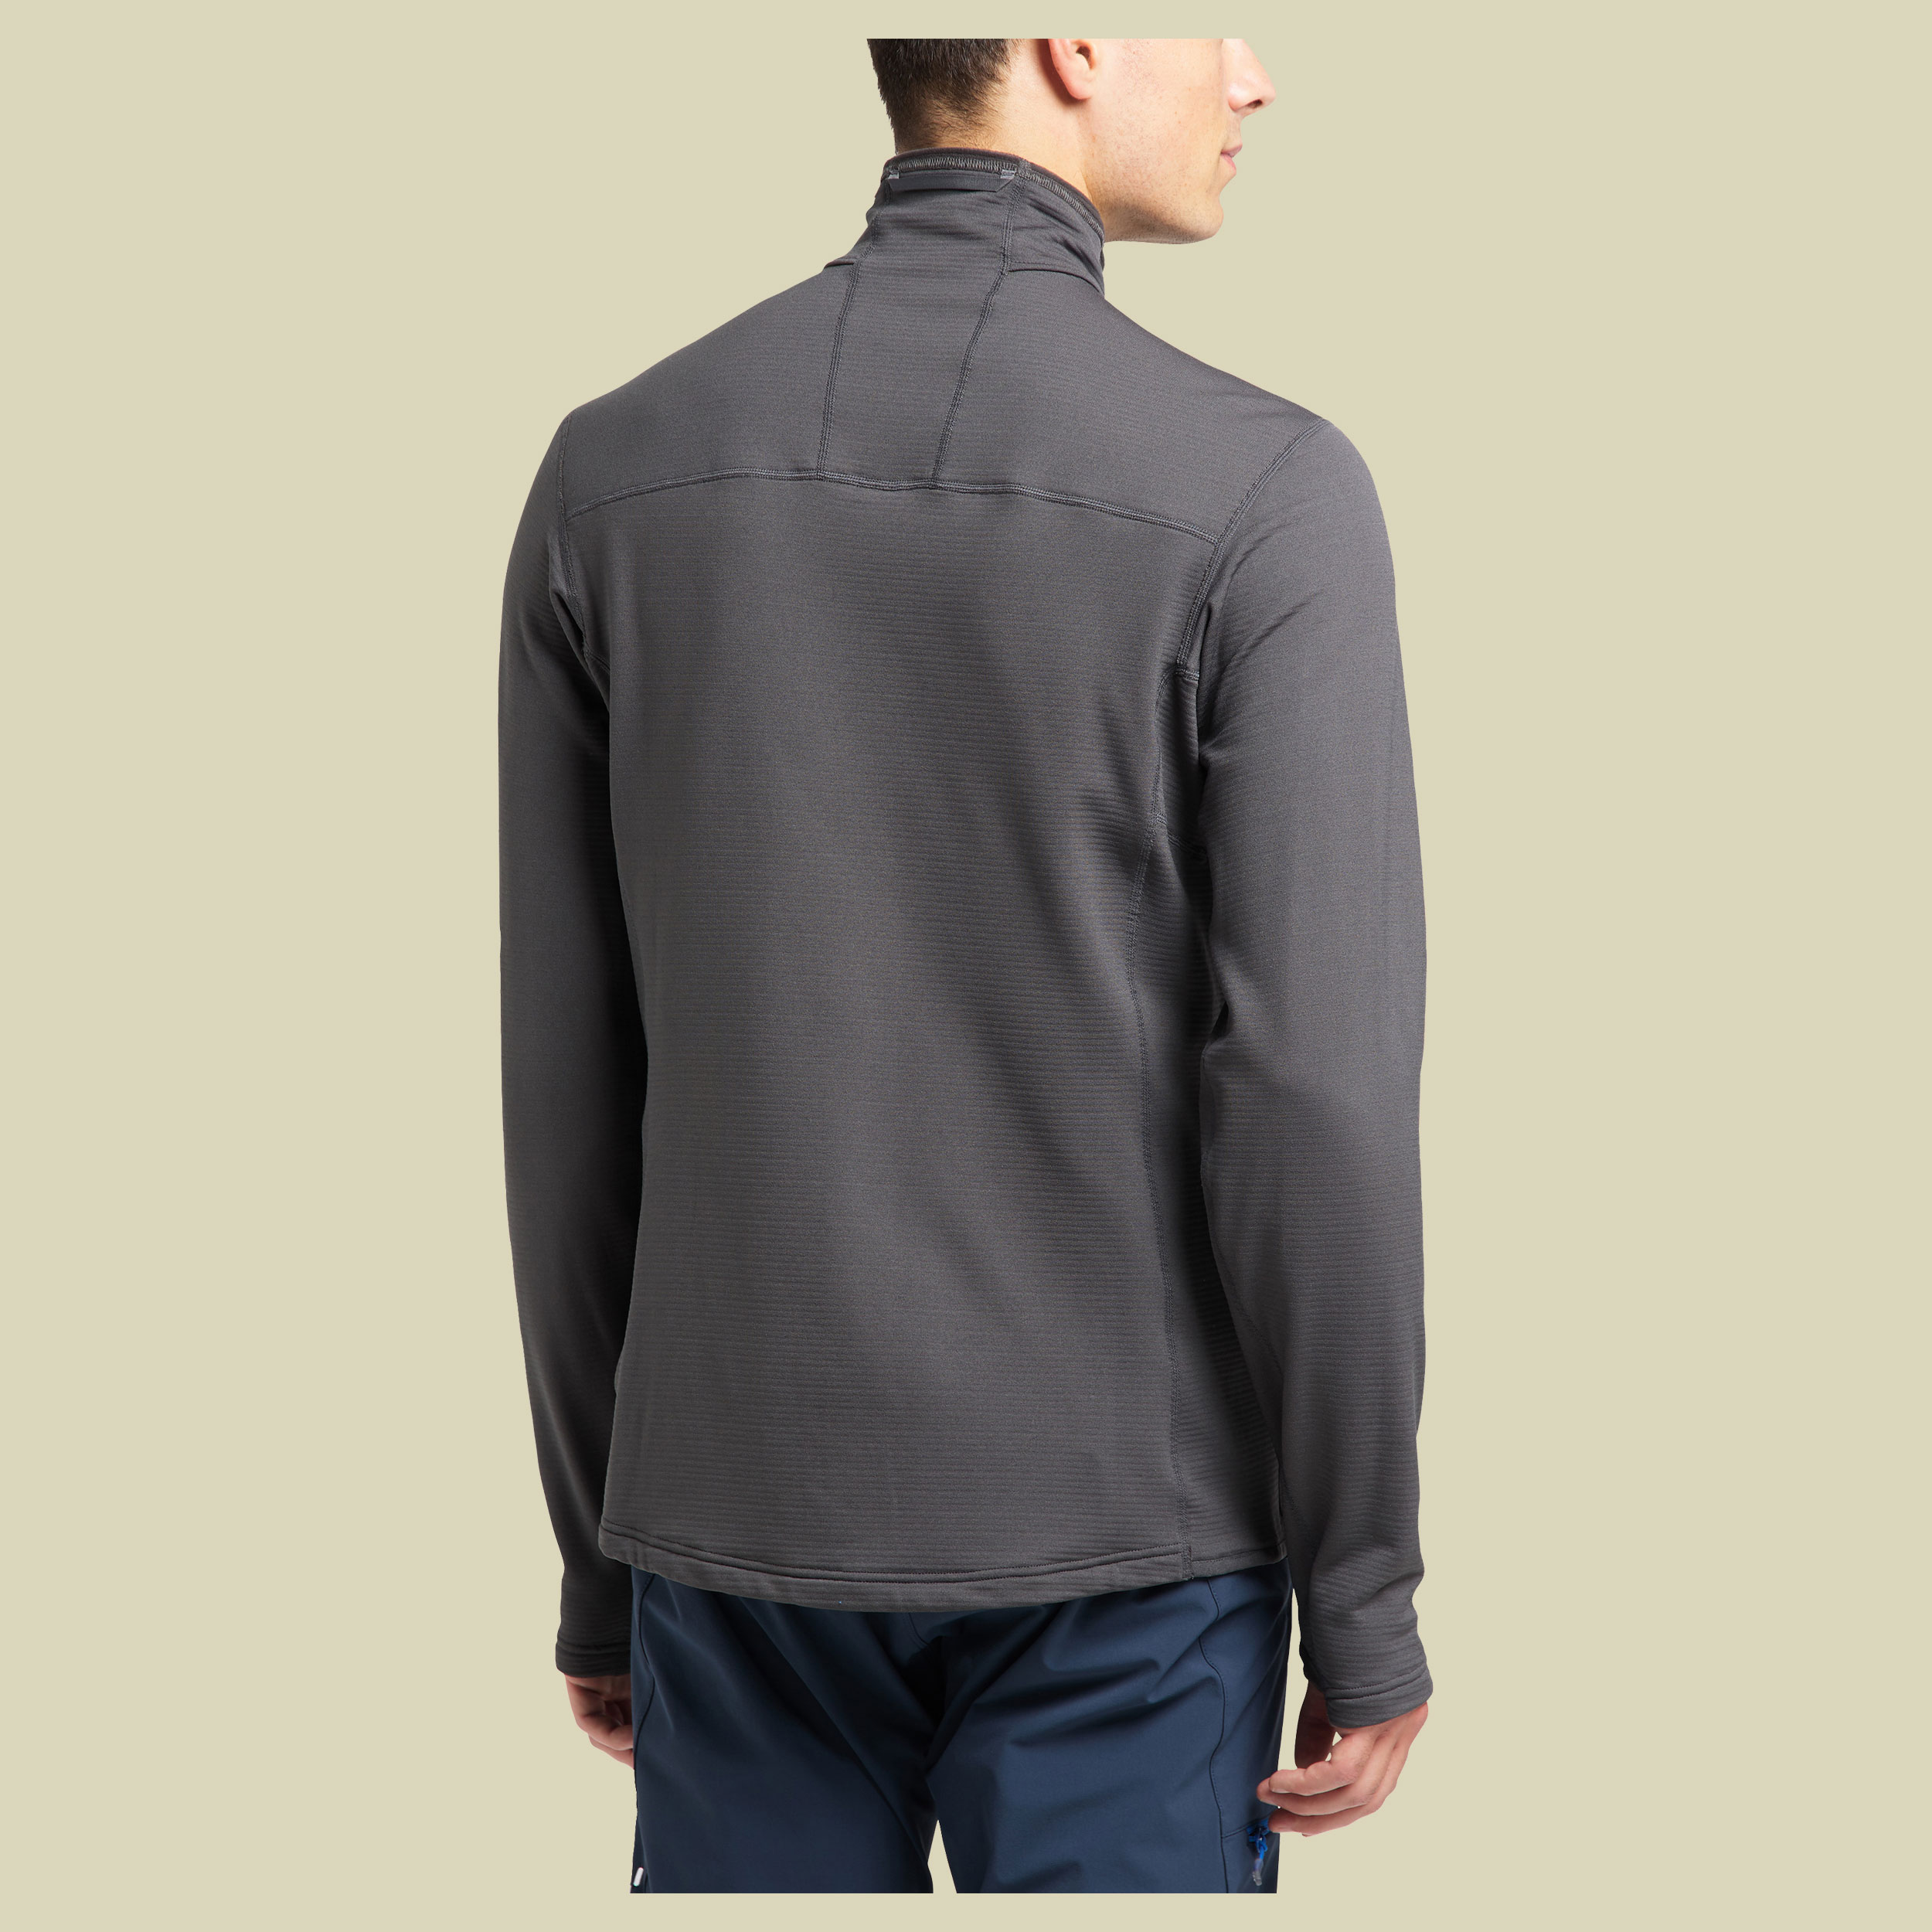 Roc Sheer Mid Jacket Men Größe XL Farbe magnetite